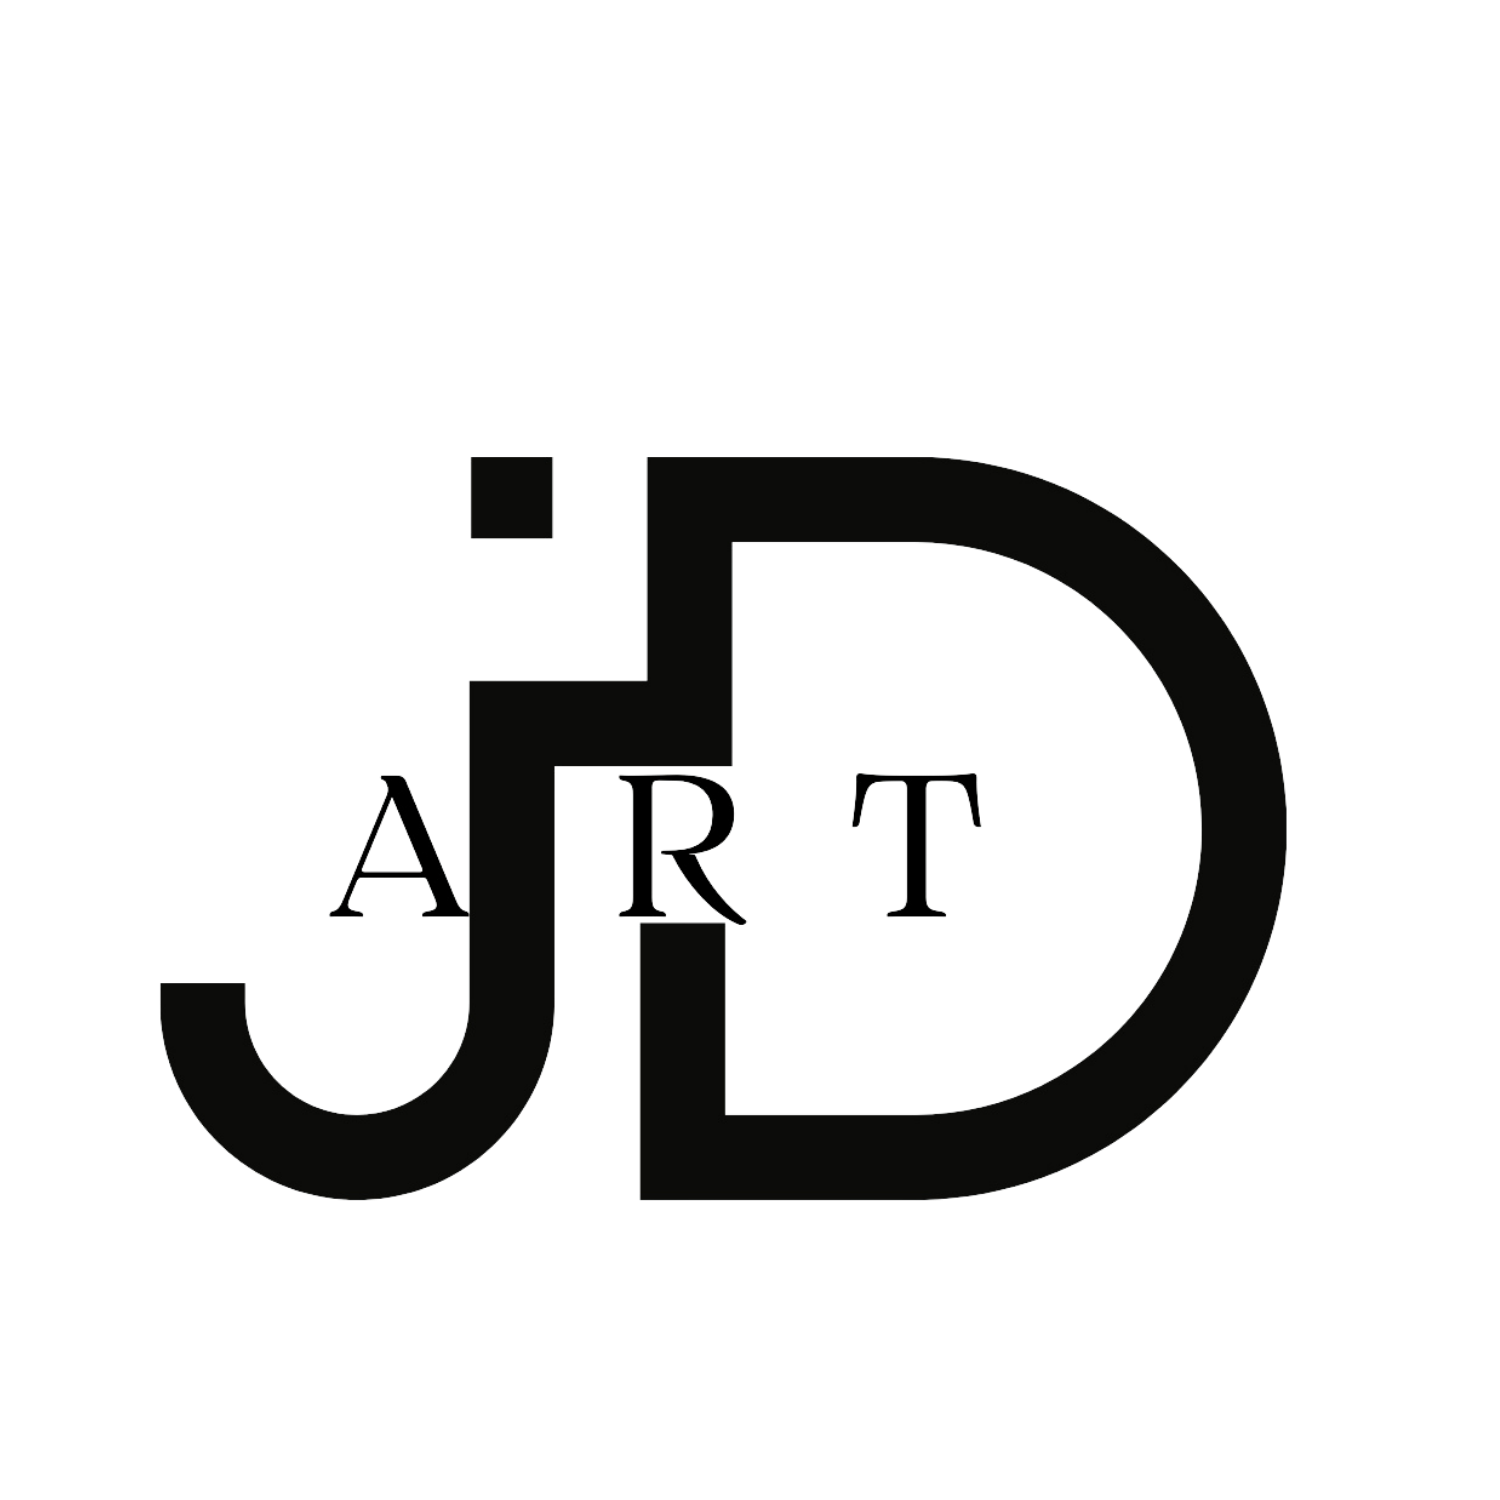 JD Art